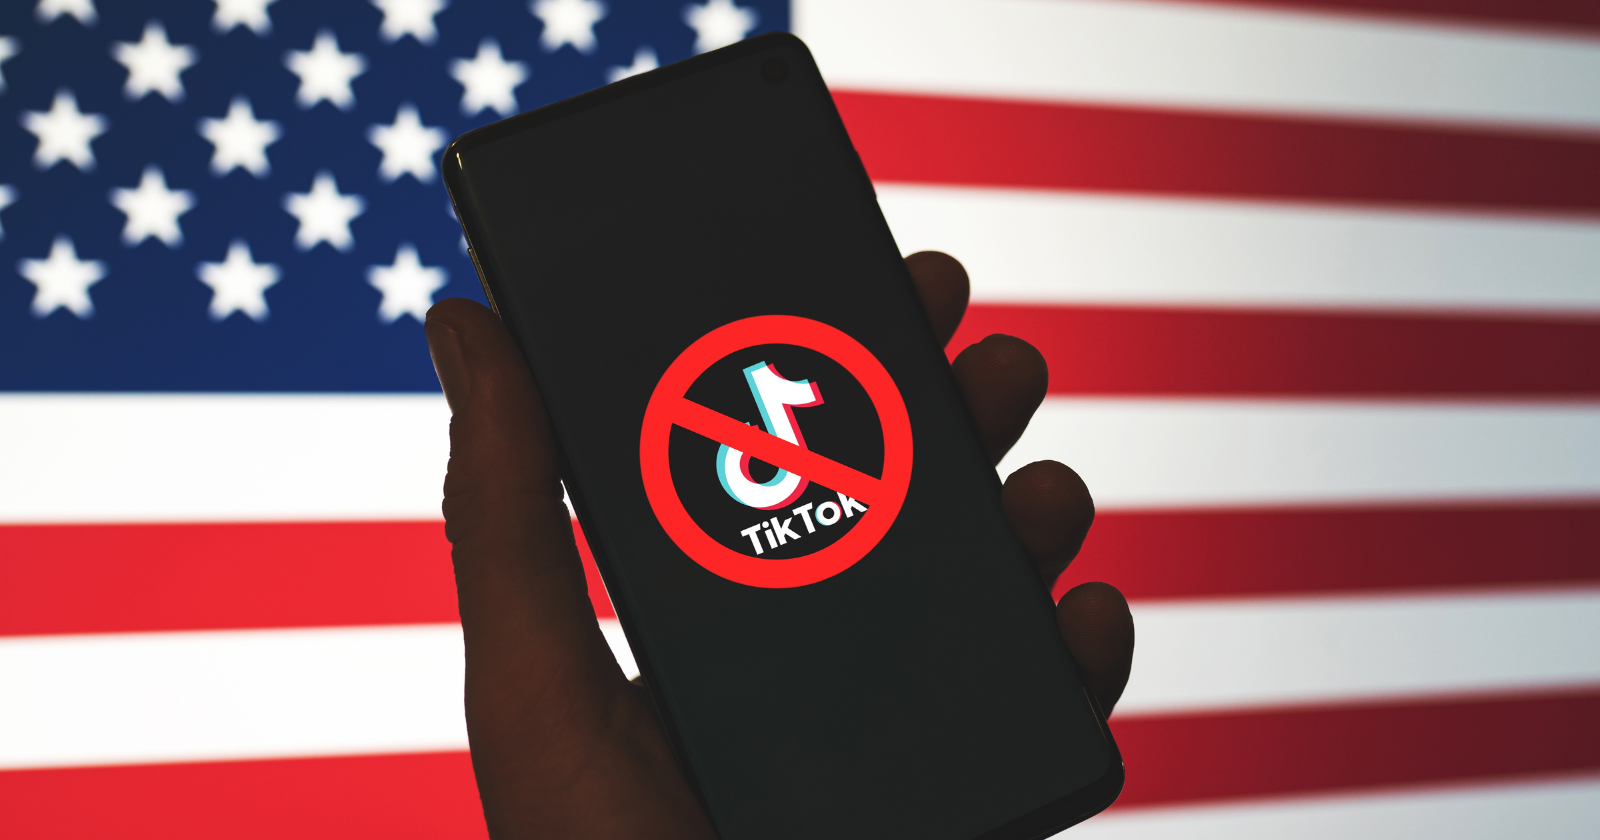 Ways The US Govt Could Block TikTok Should It Decide To